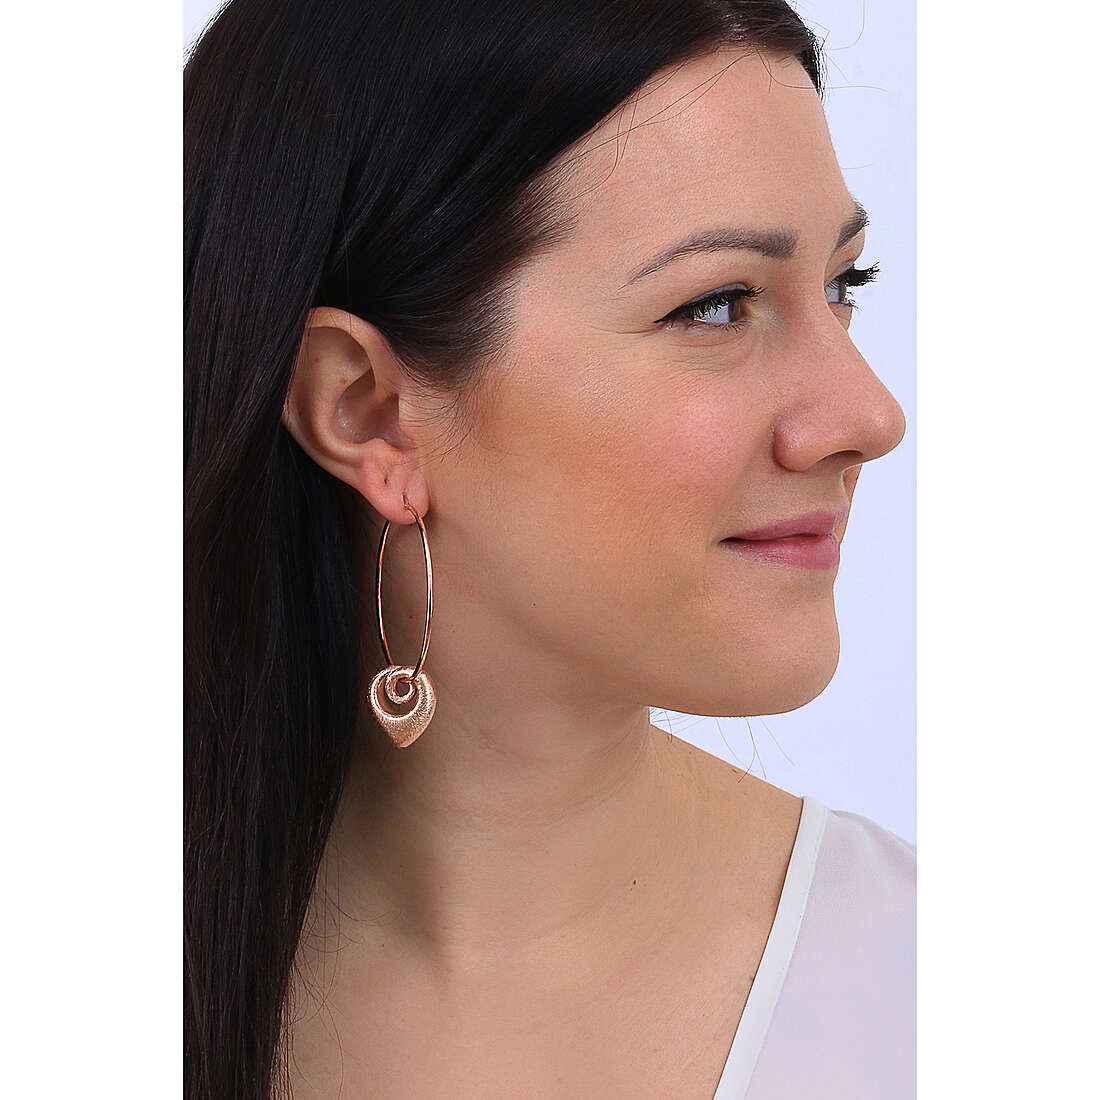 Ottaviani earrings woman 600086O-1 photo wearing